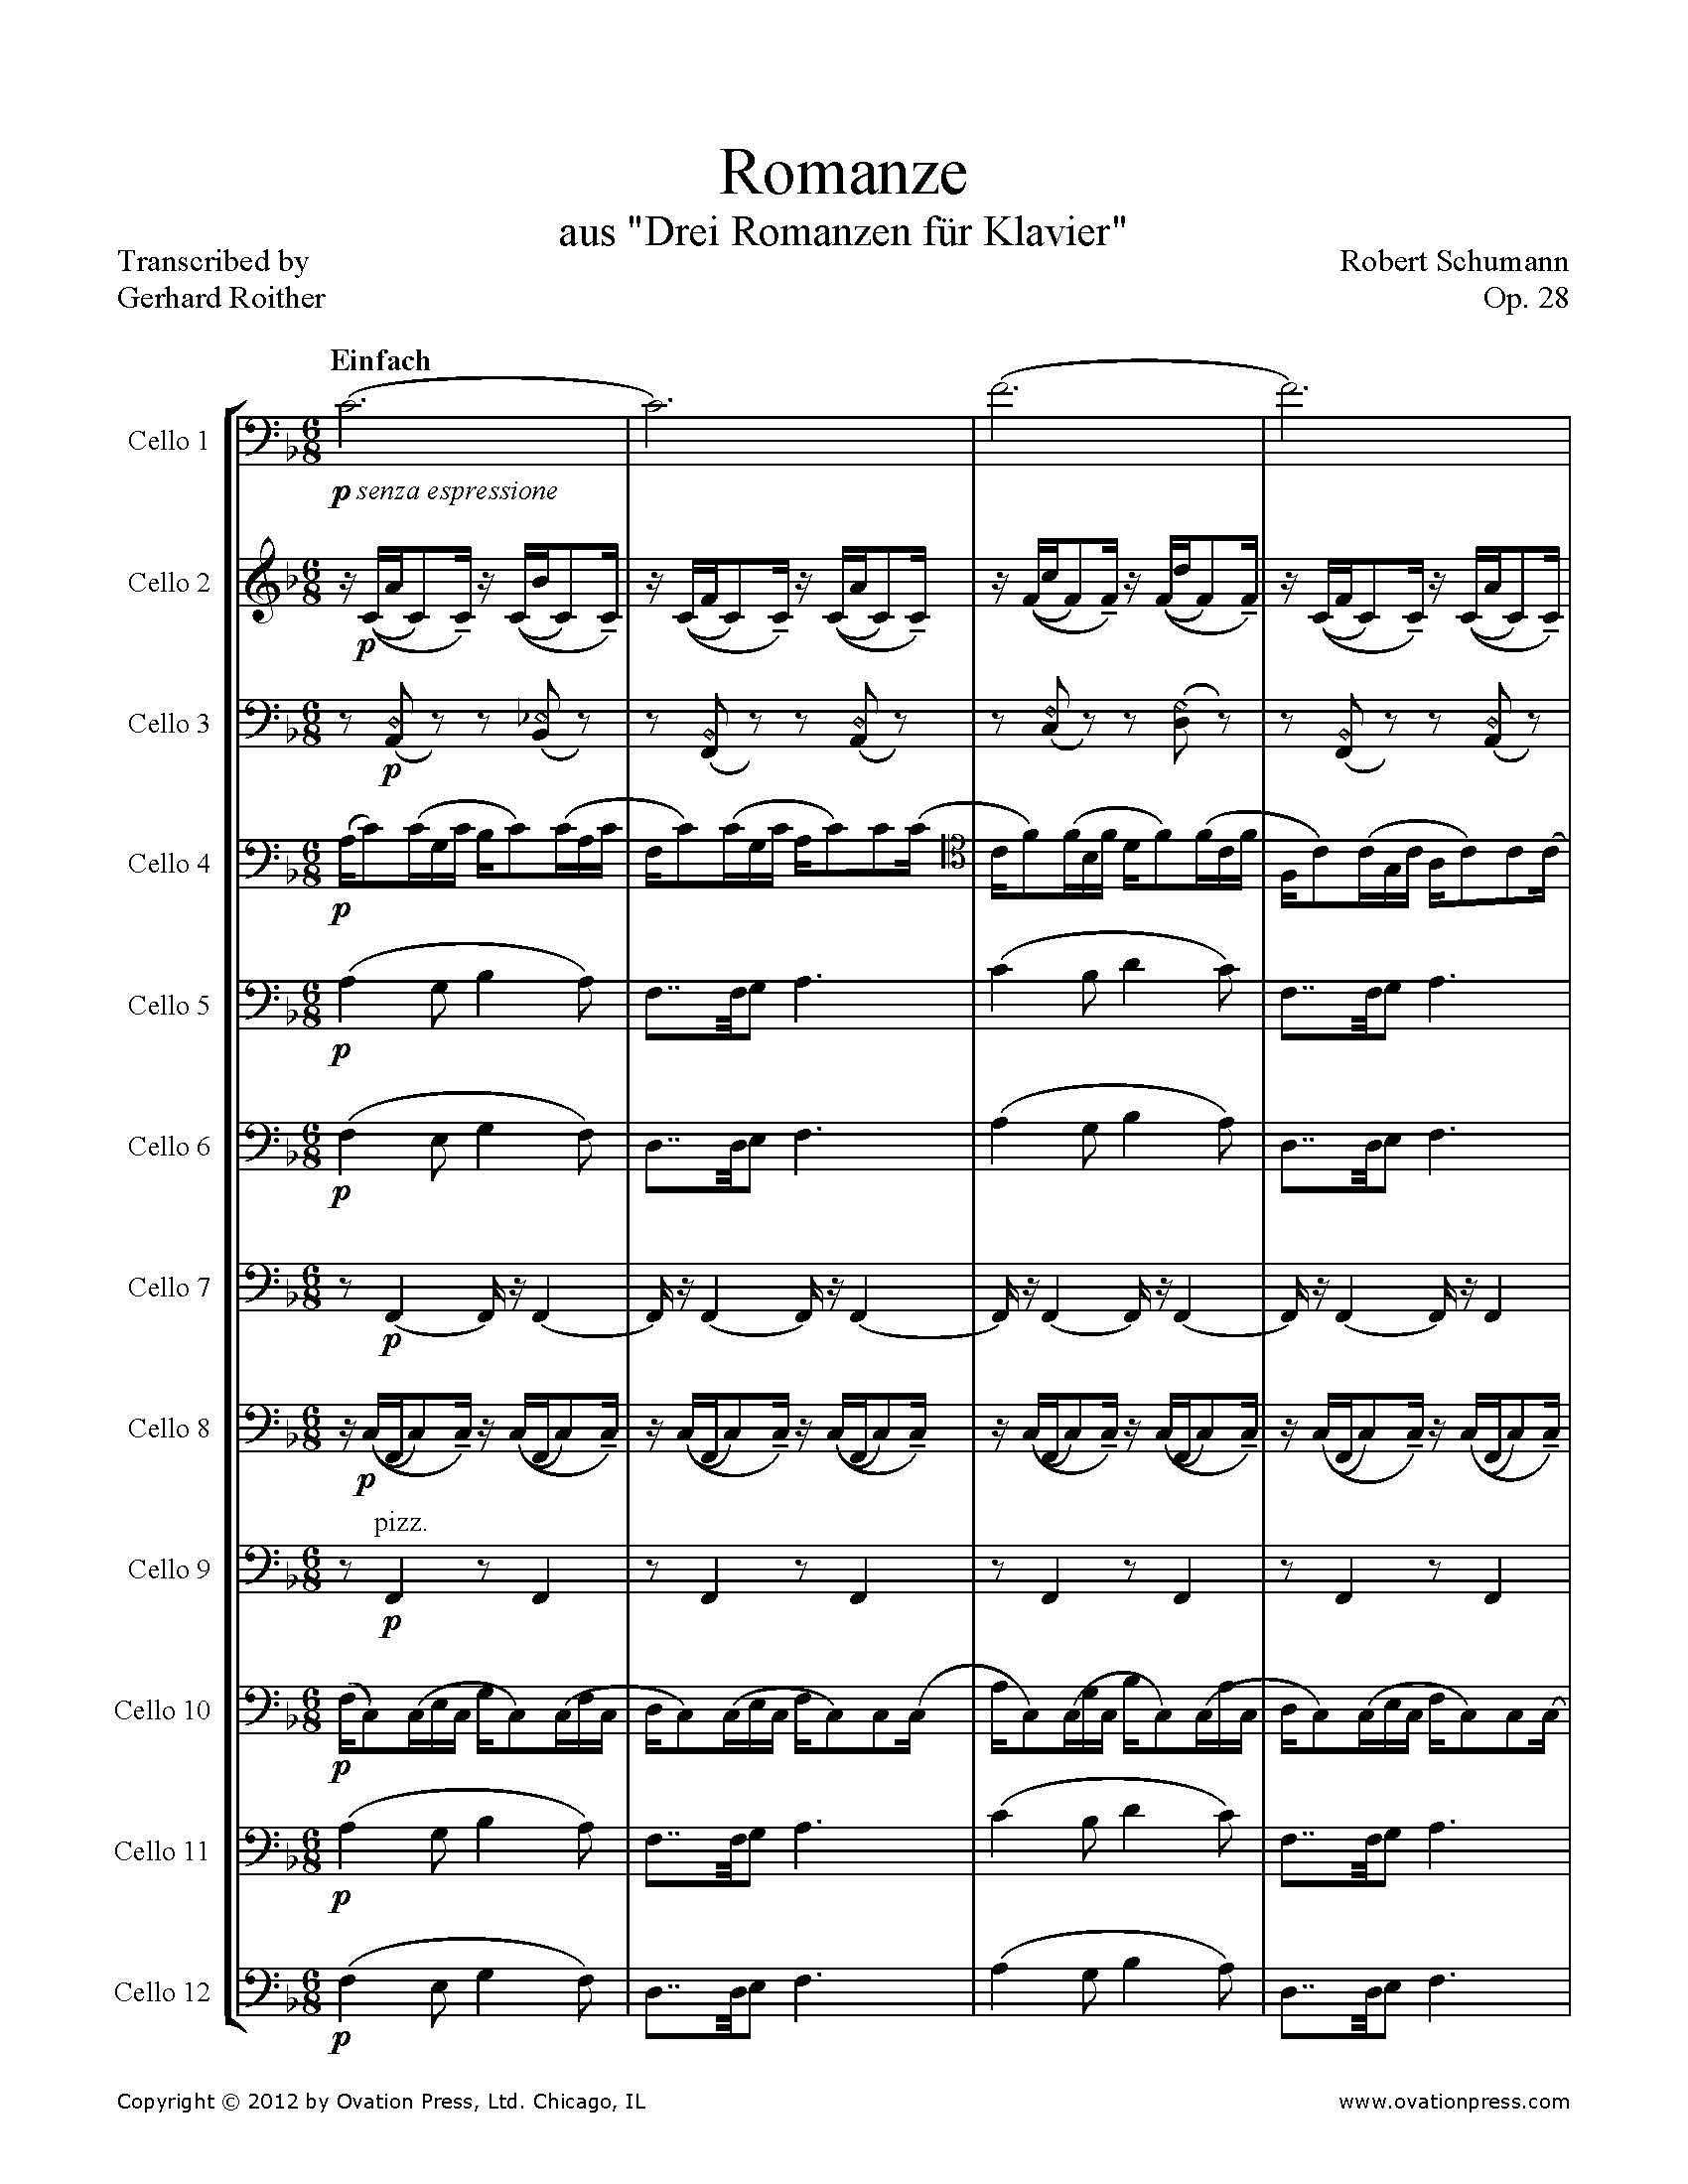 Schumann Romanze Arranged for 12 Celli